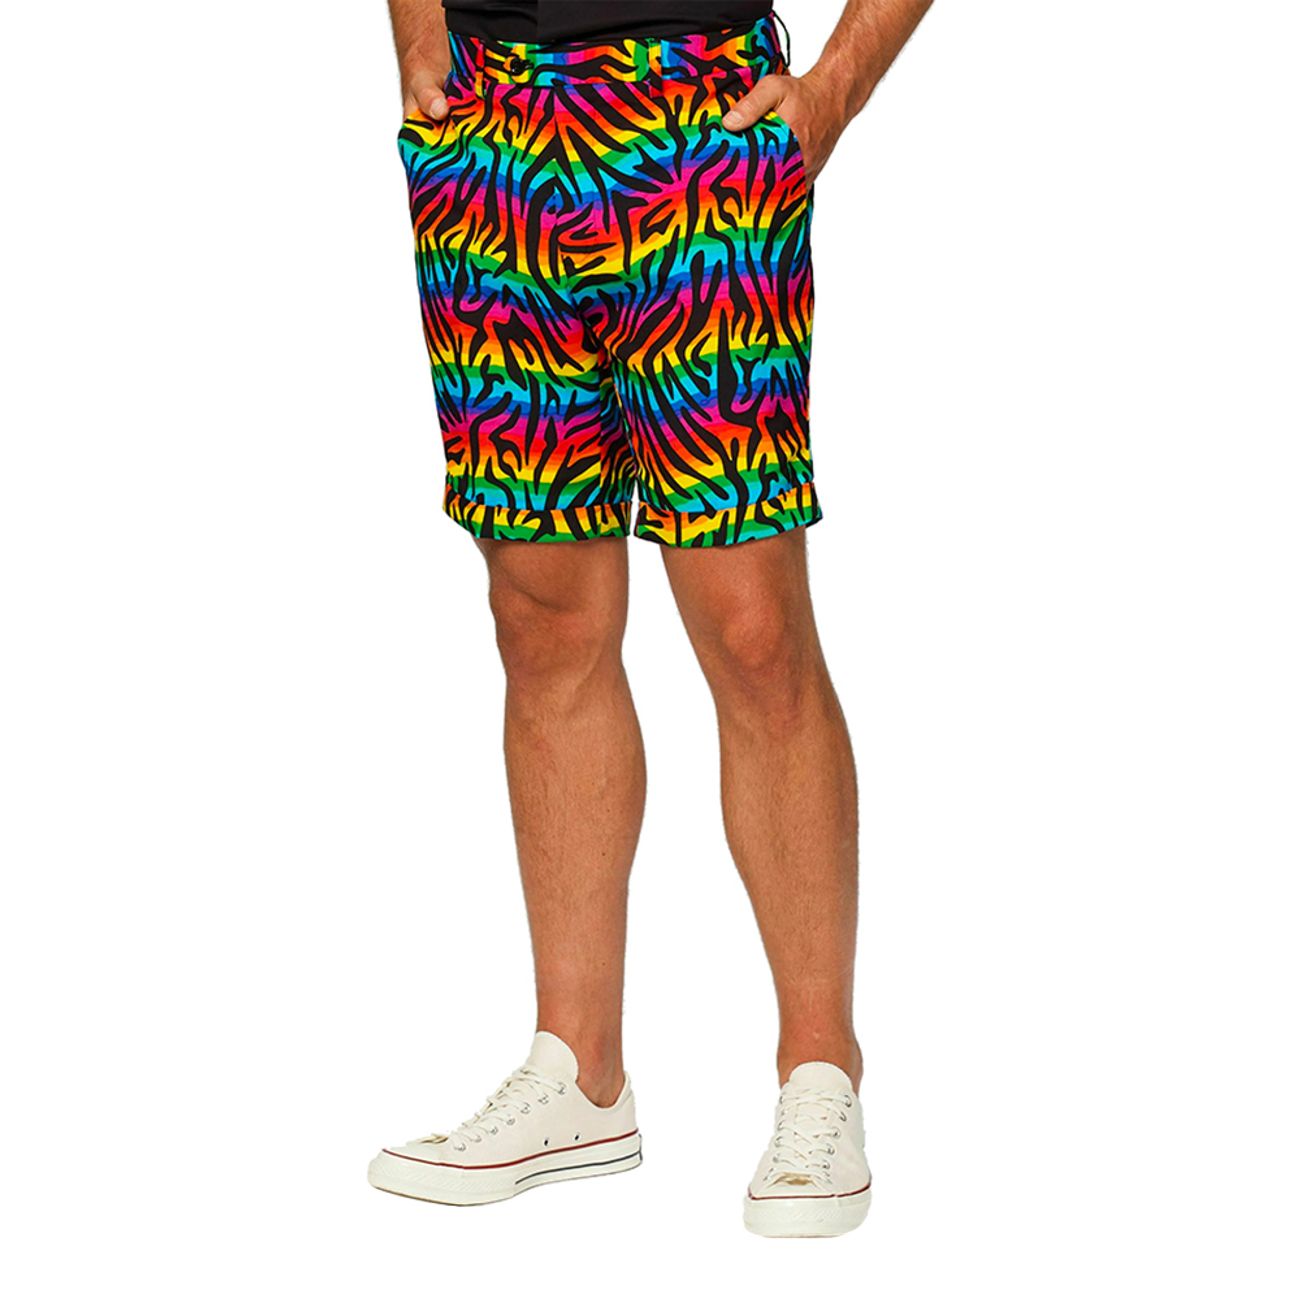 opposuits-wild-rainbow-shorts-kostym-74452-6